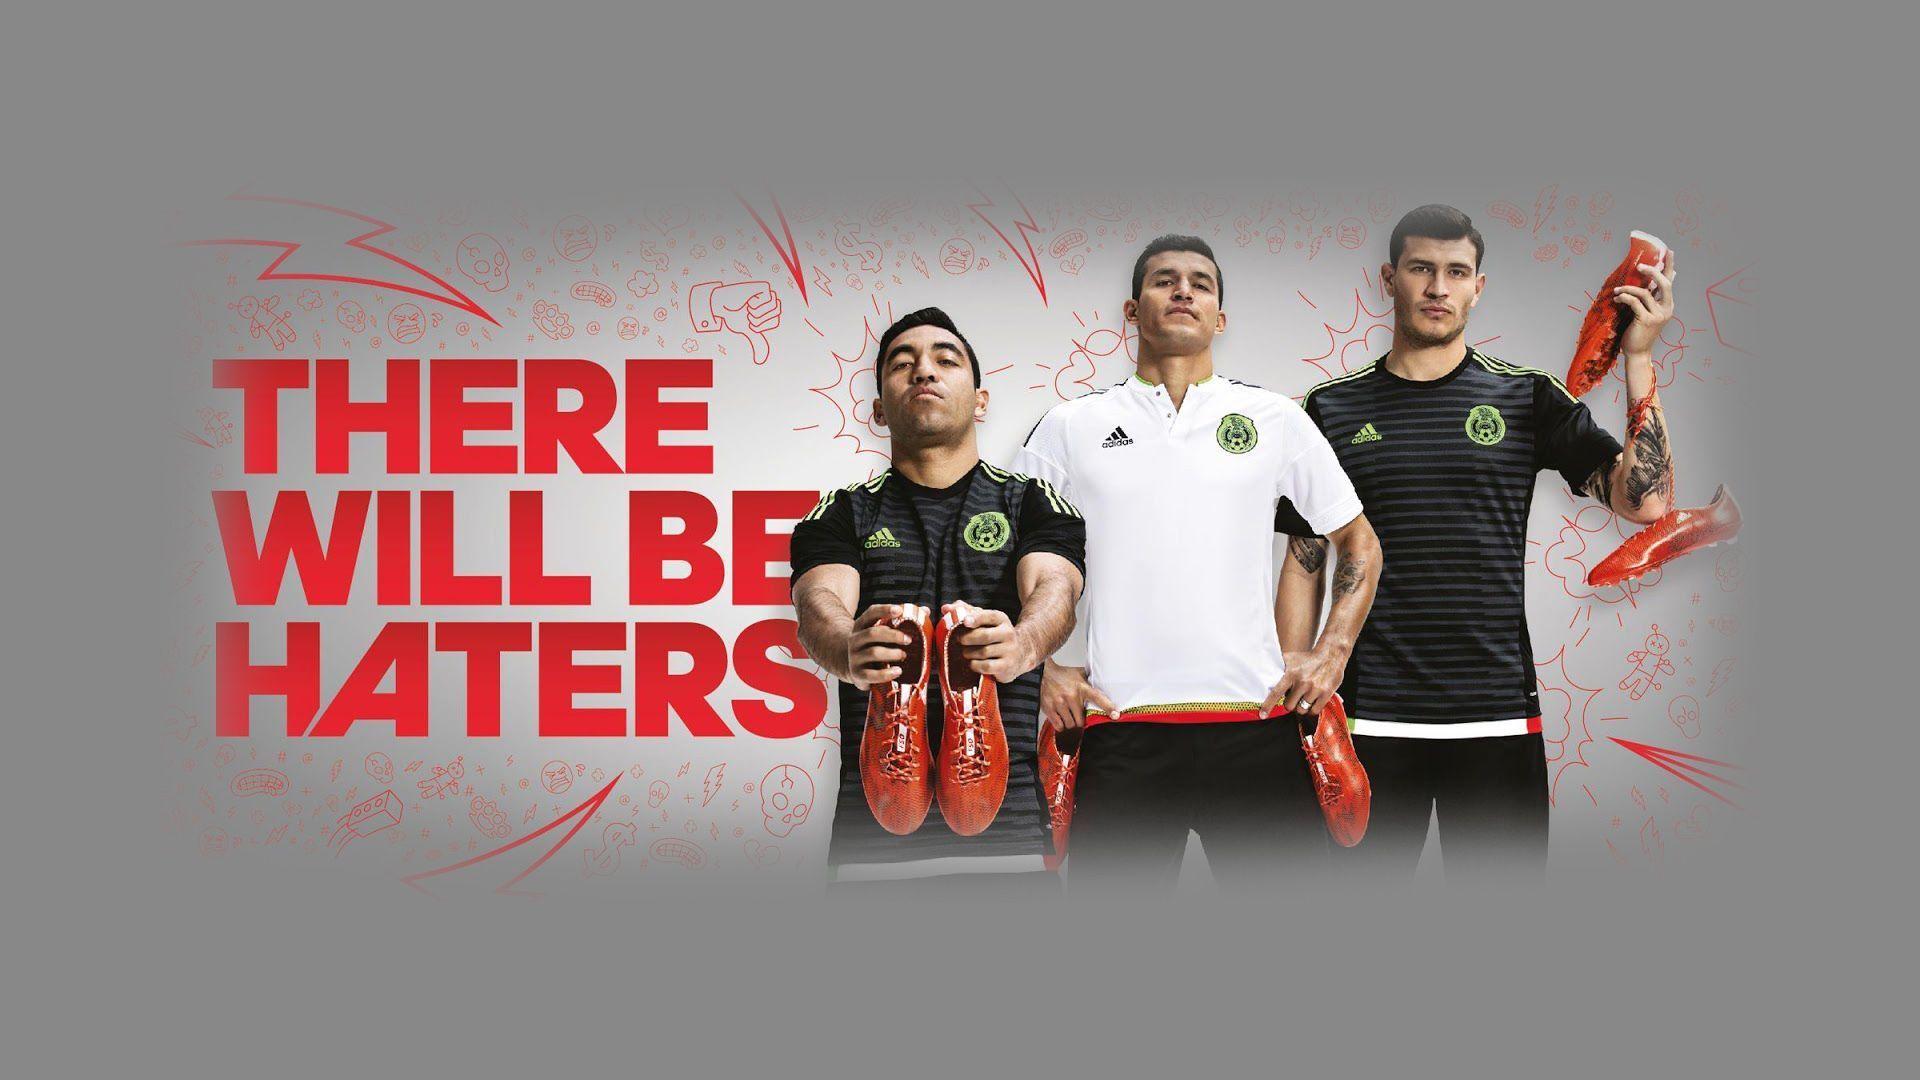 Mexico 2015 Copa America Adidas Kits Wallpaper Wide or HD. Sports